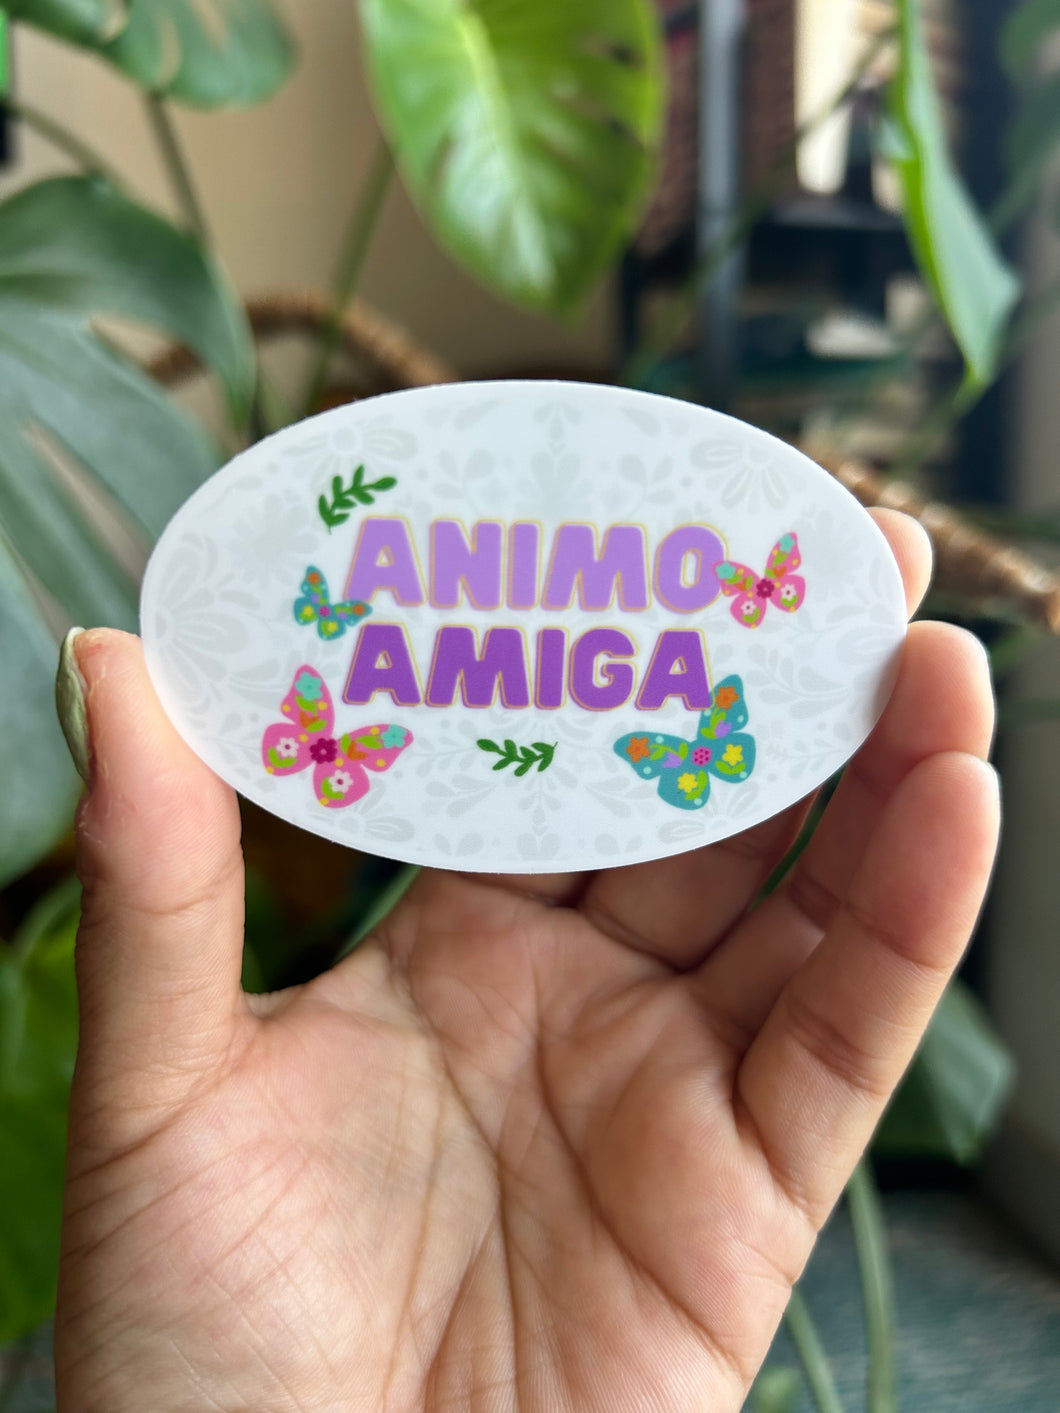 Animo Amiga sticker